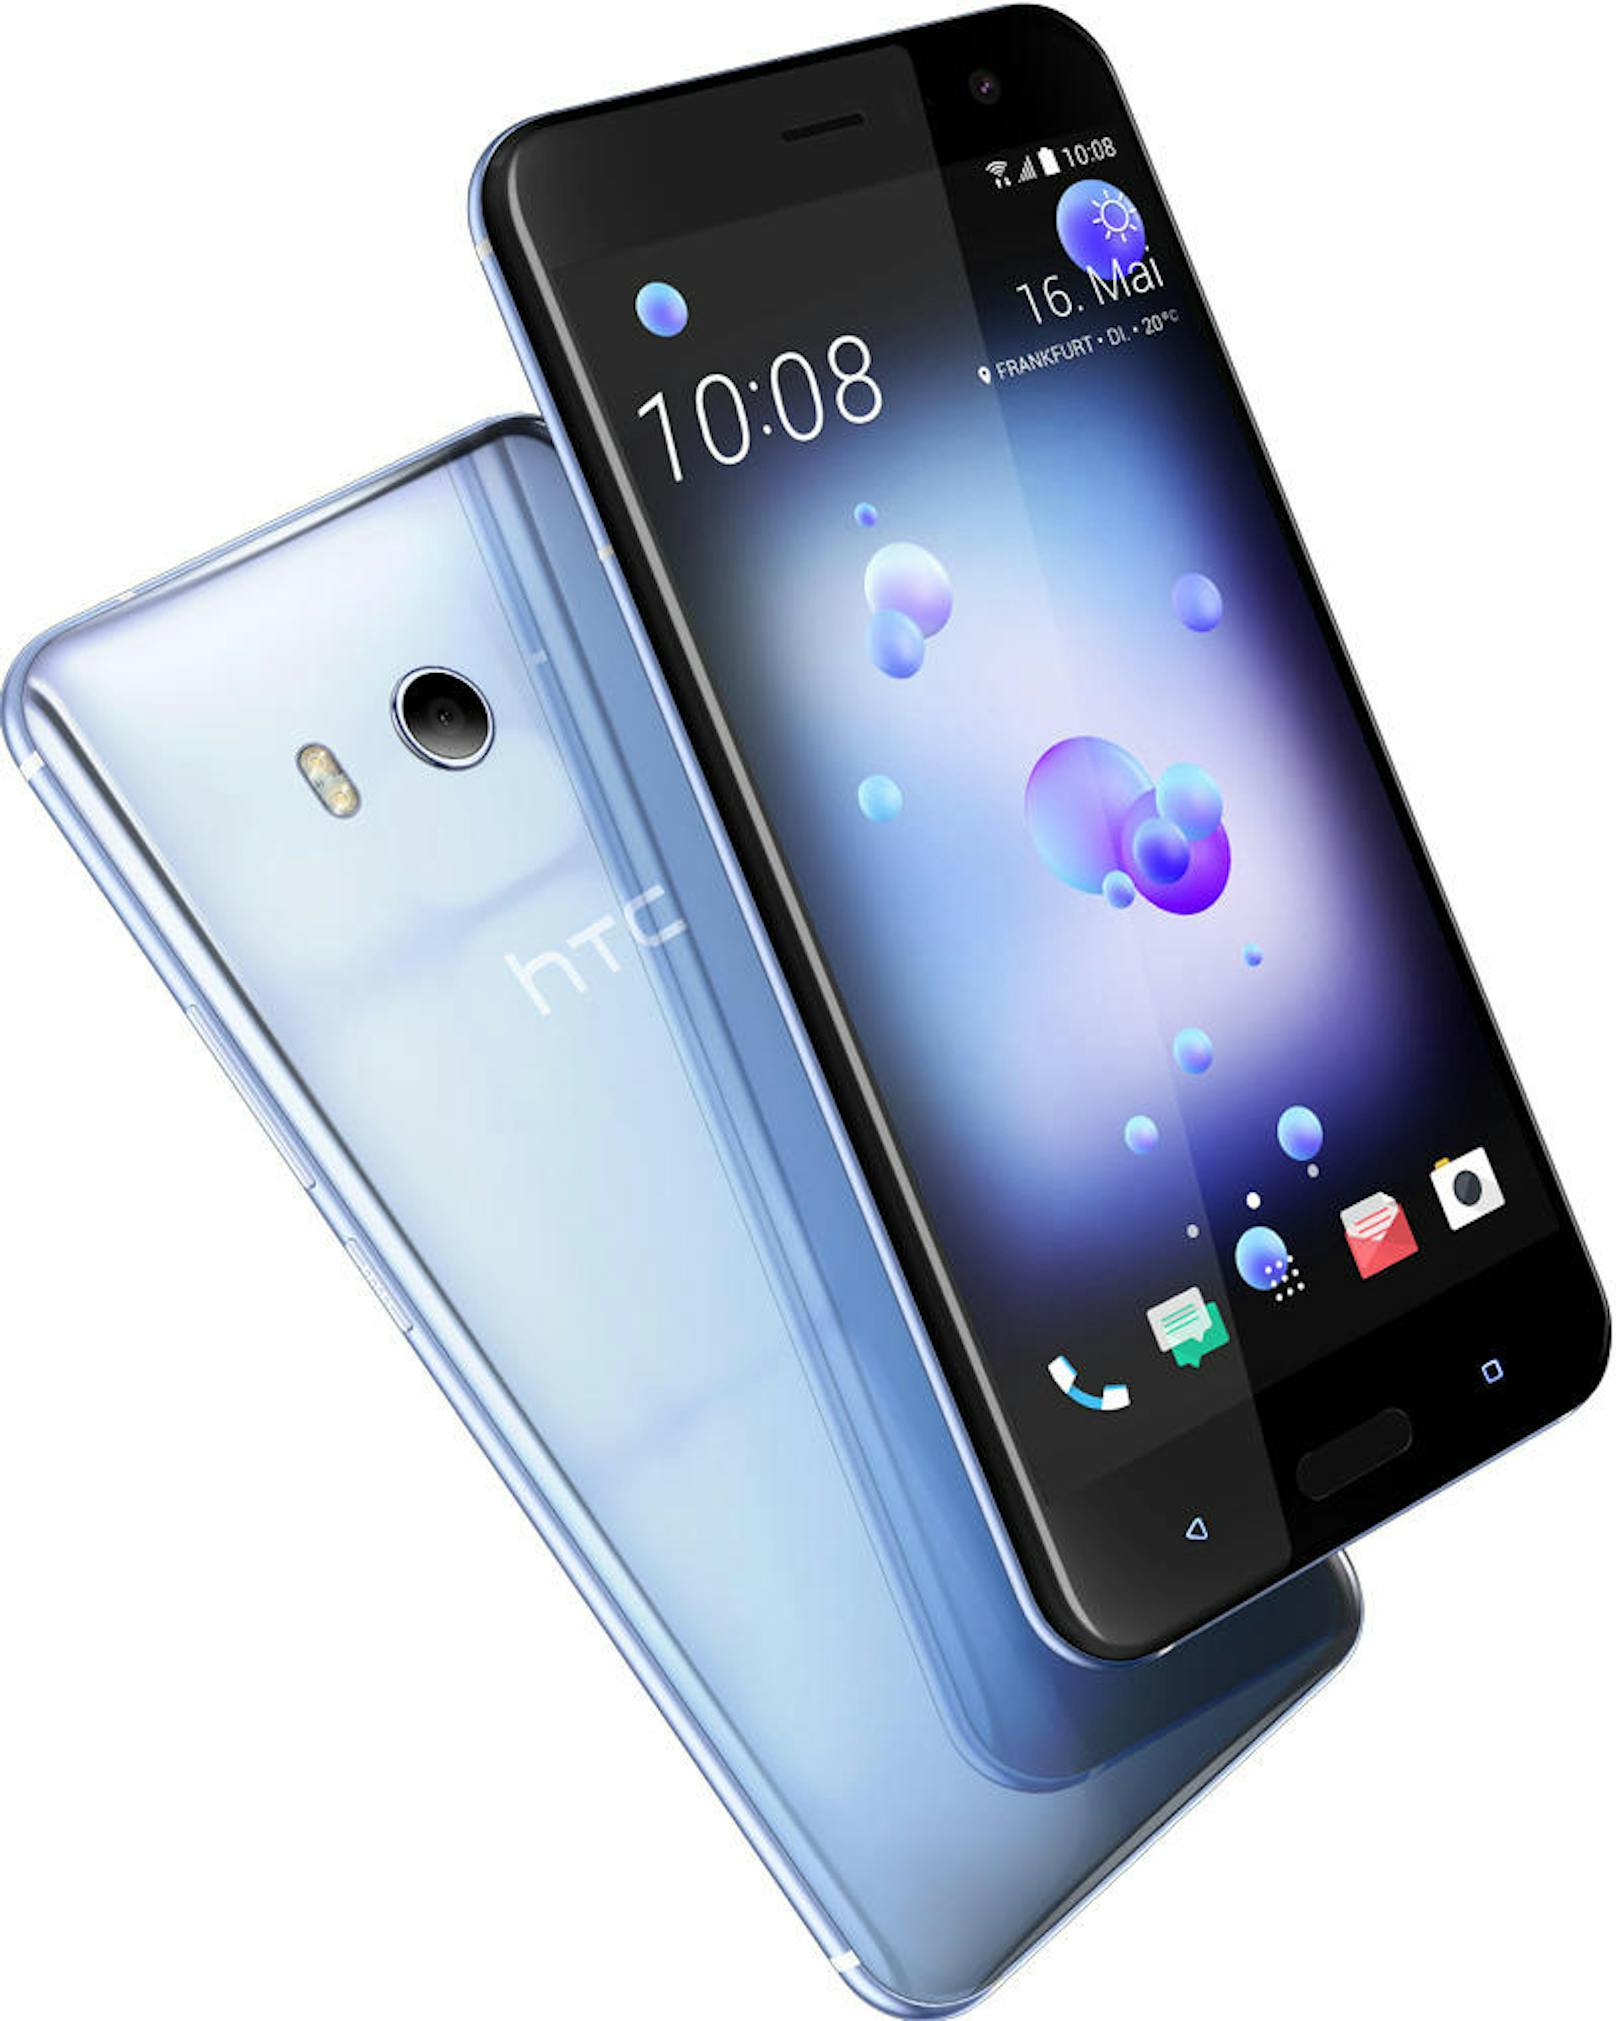 Das HTC U 11 in der Farbe Amazing Silver